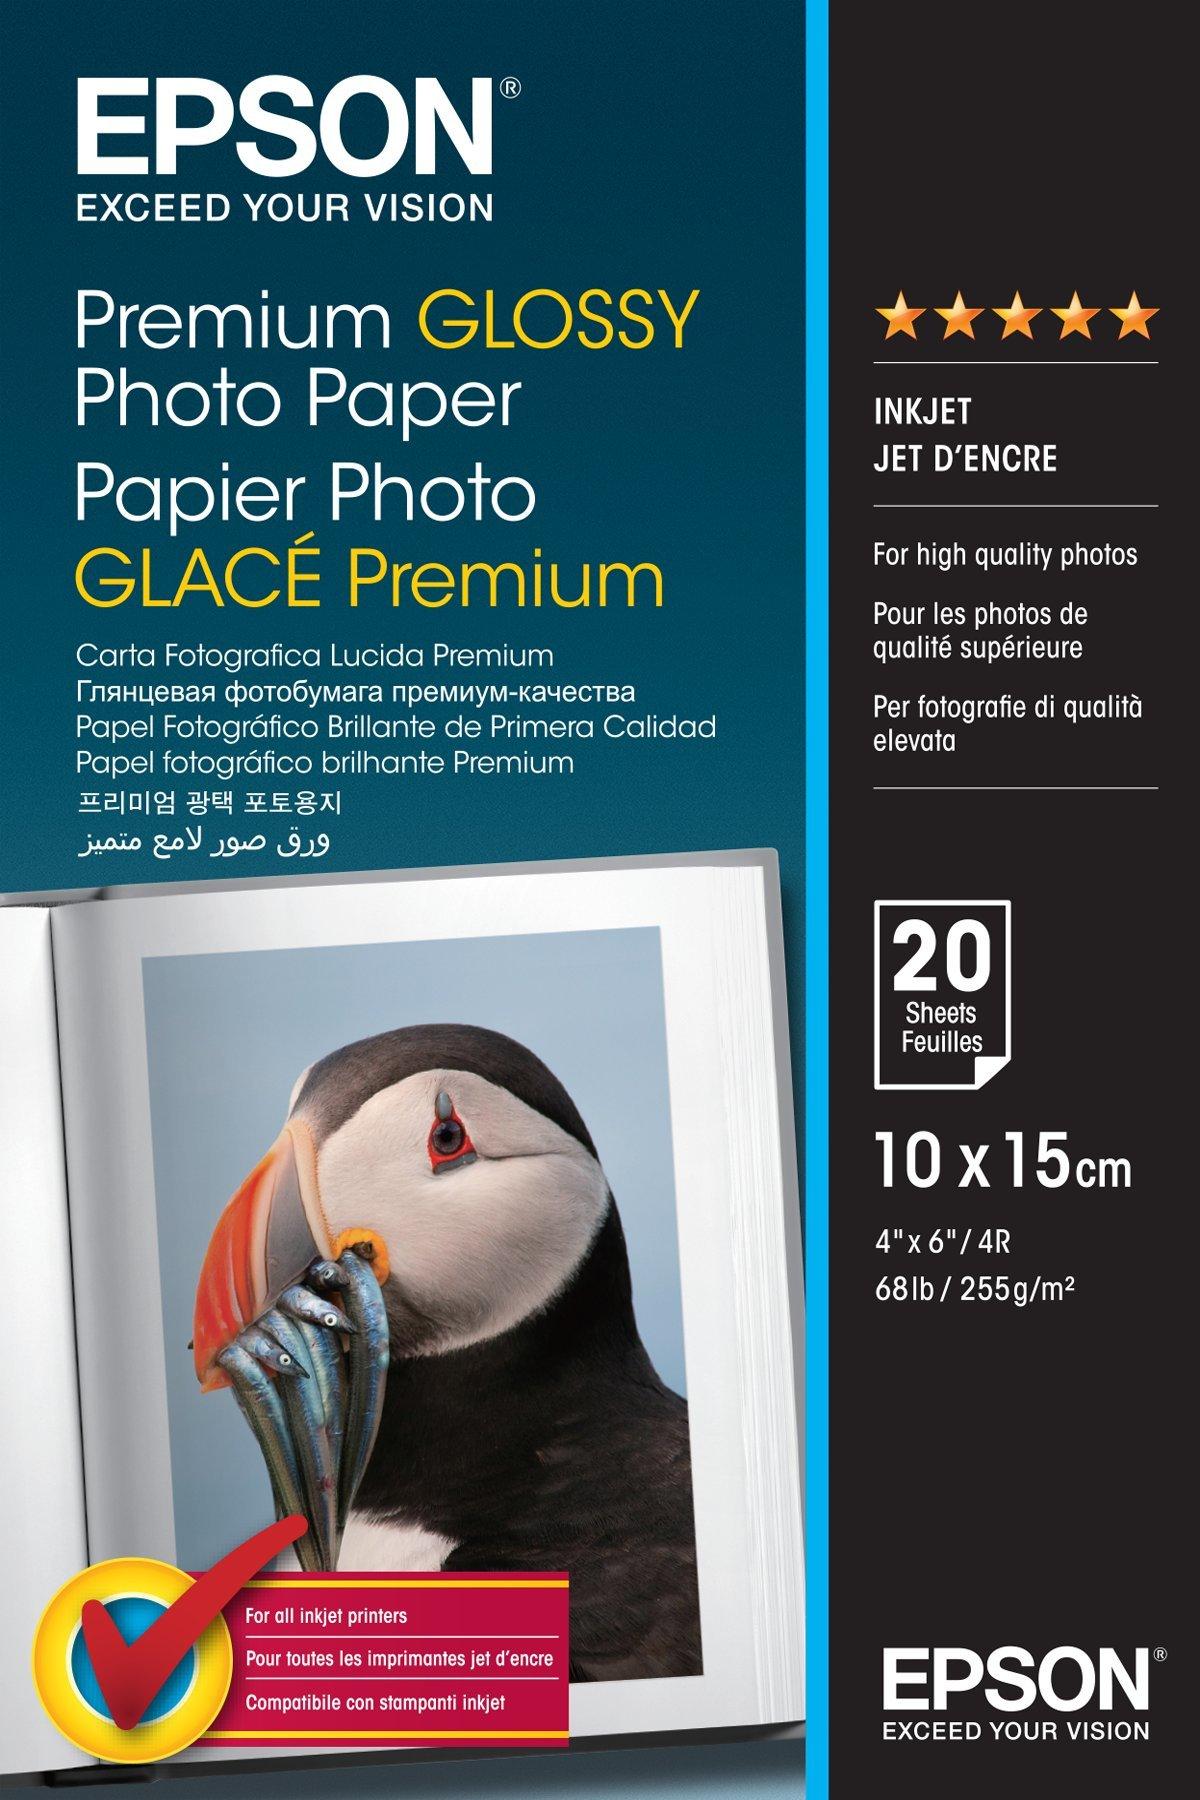 Epson Premium Glossy Photo Paper Review 